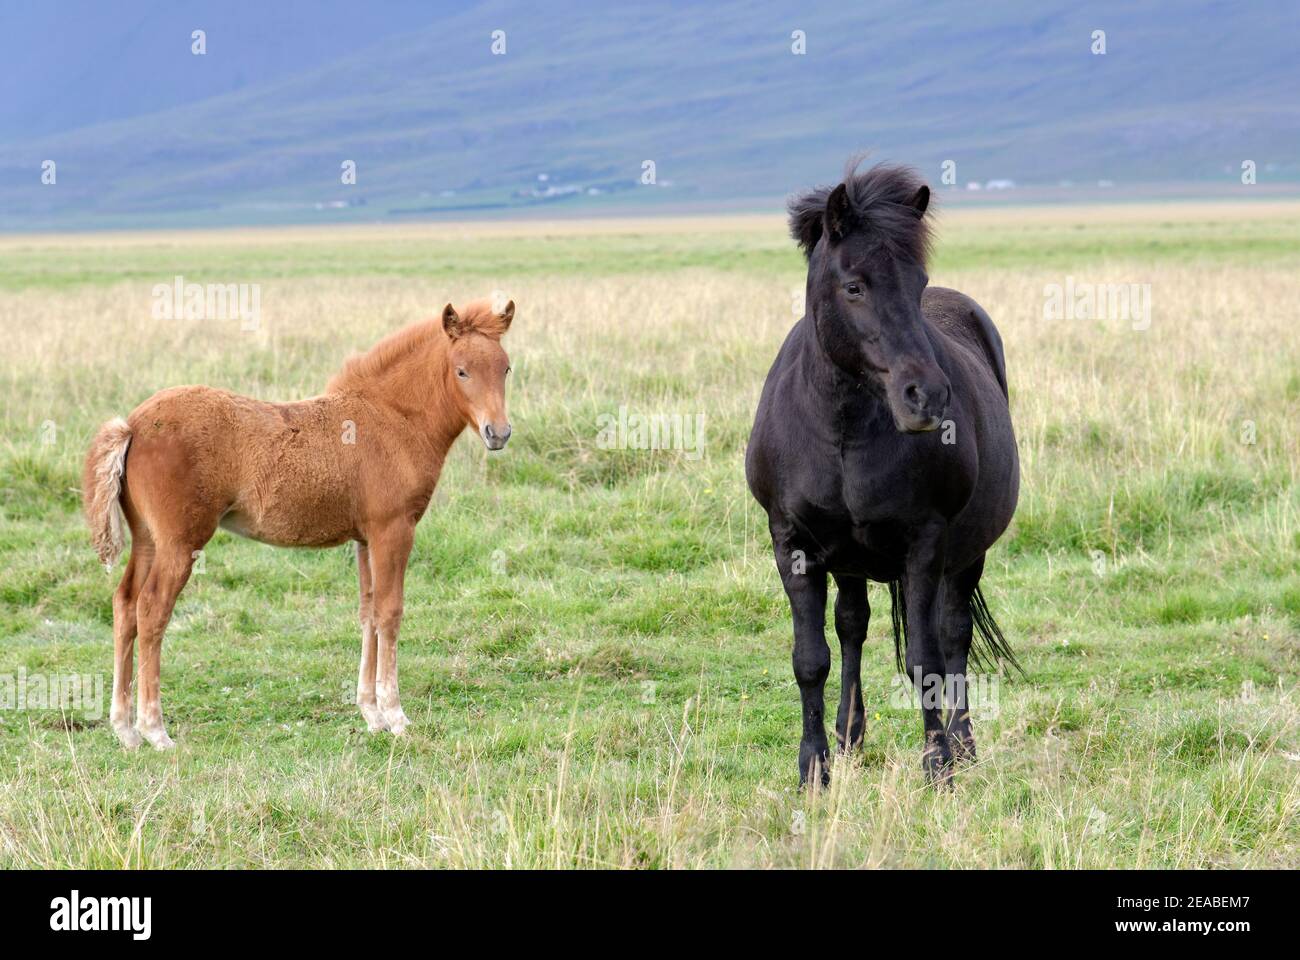 Iceland horses (Equus ferus caballus), mare with foal, Litla a, Akureyri, Northern Iceland Stock Photo